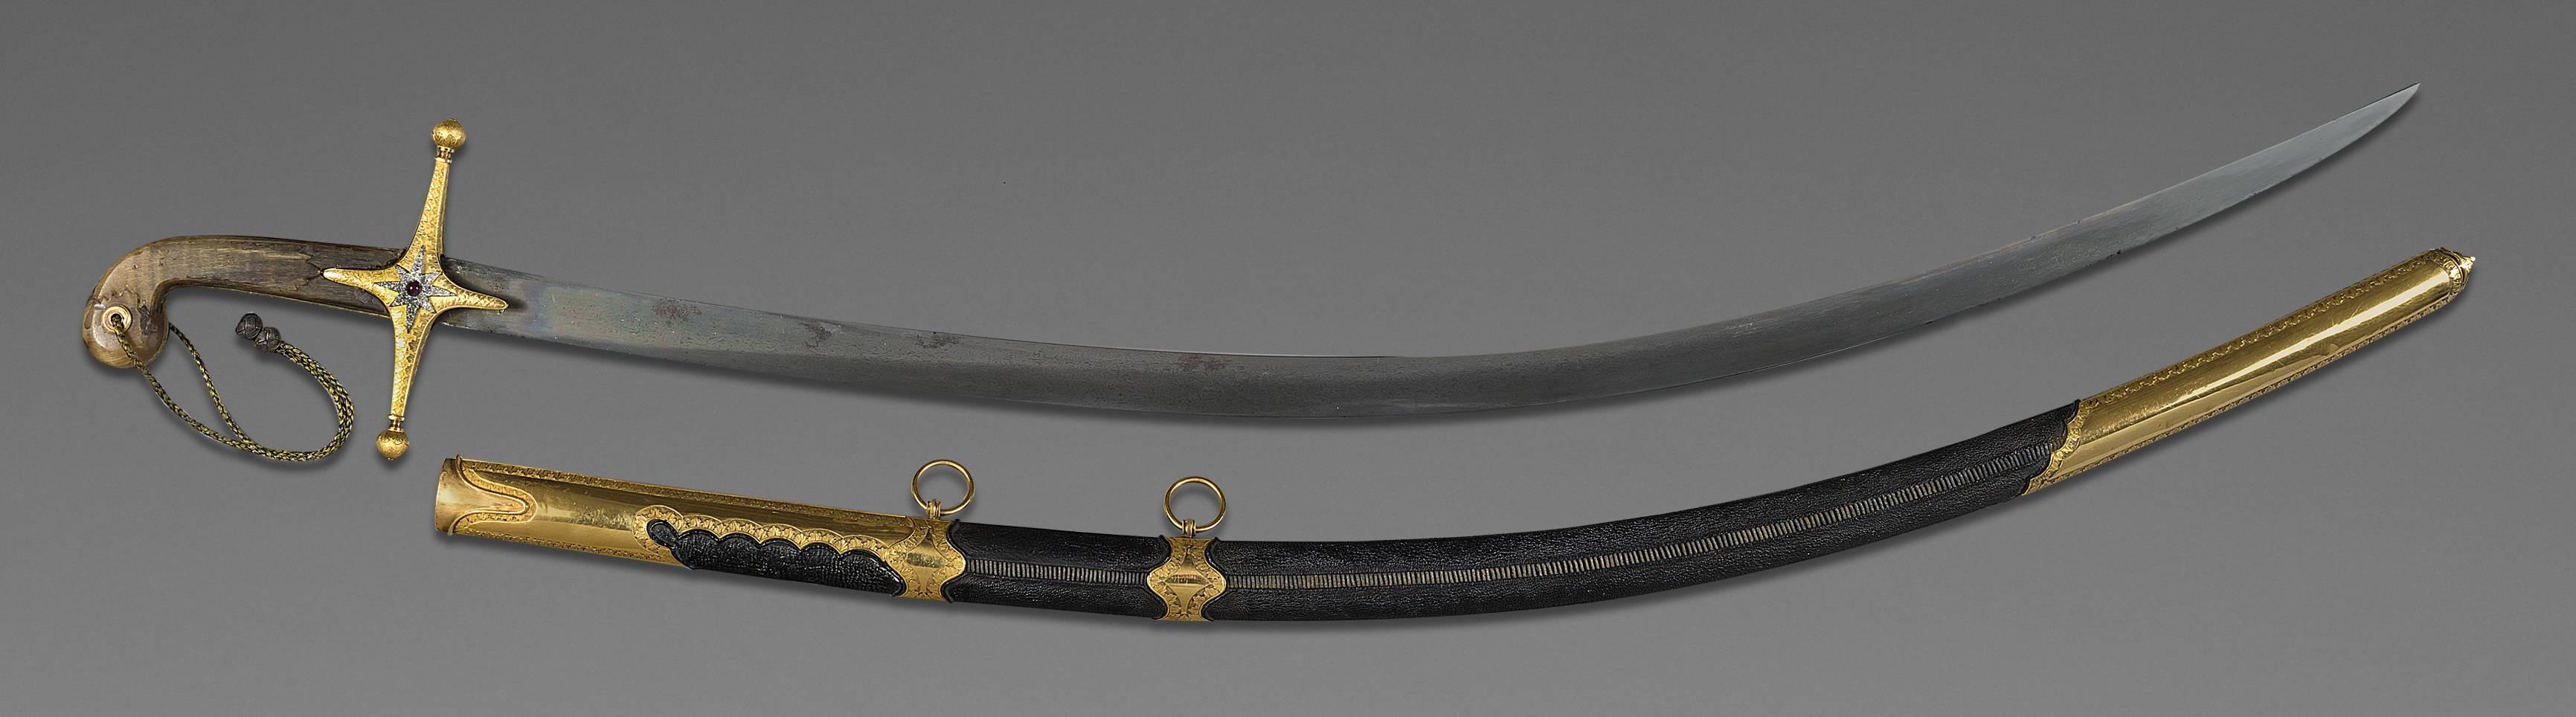 18th century saber